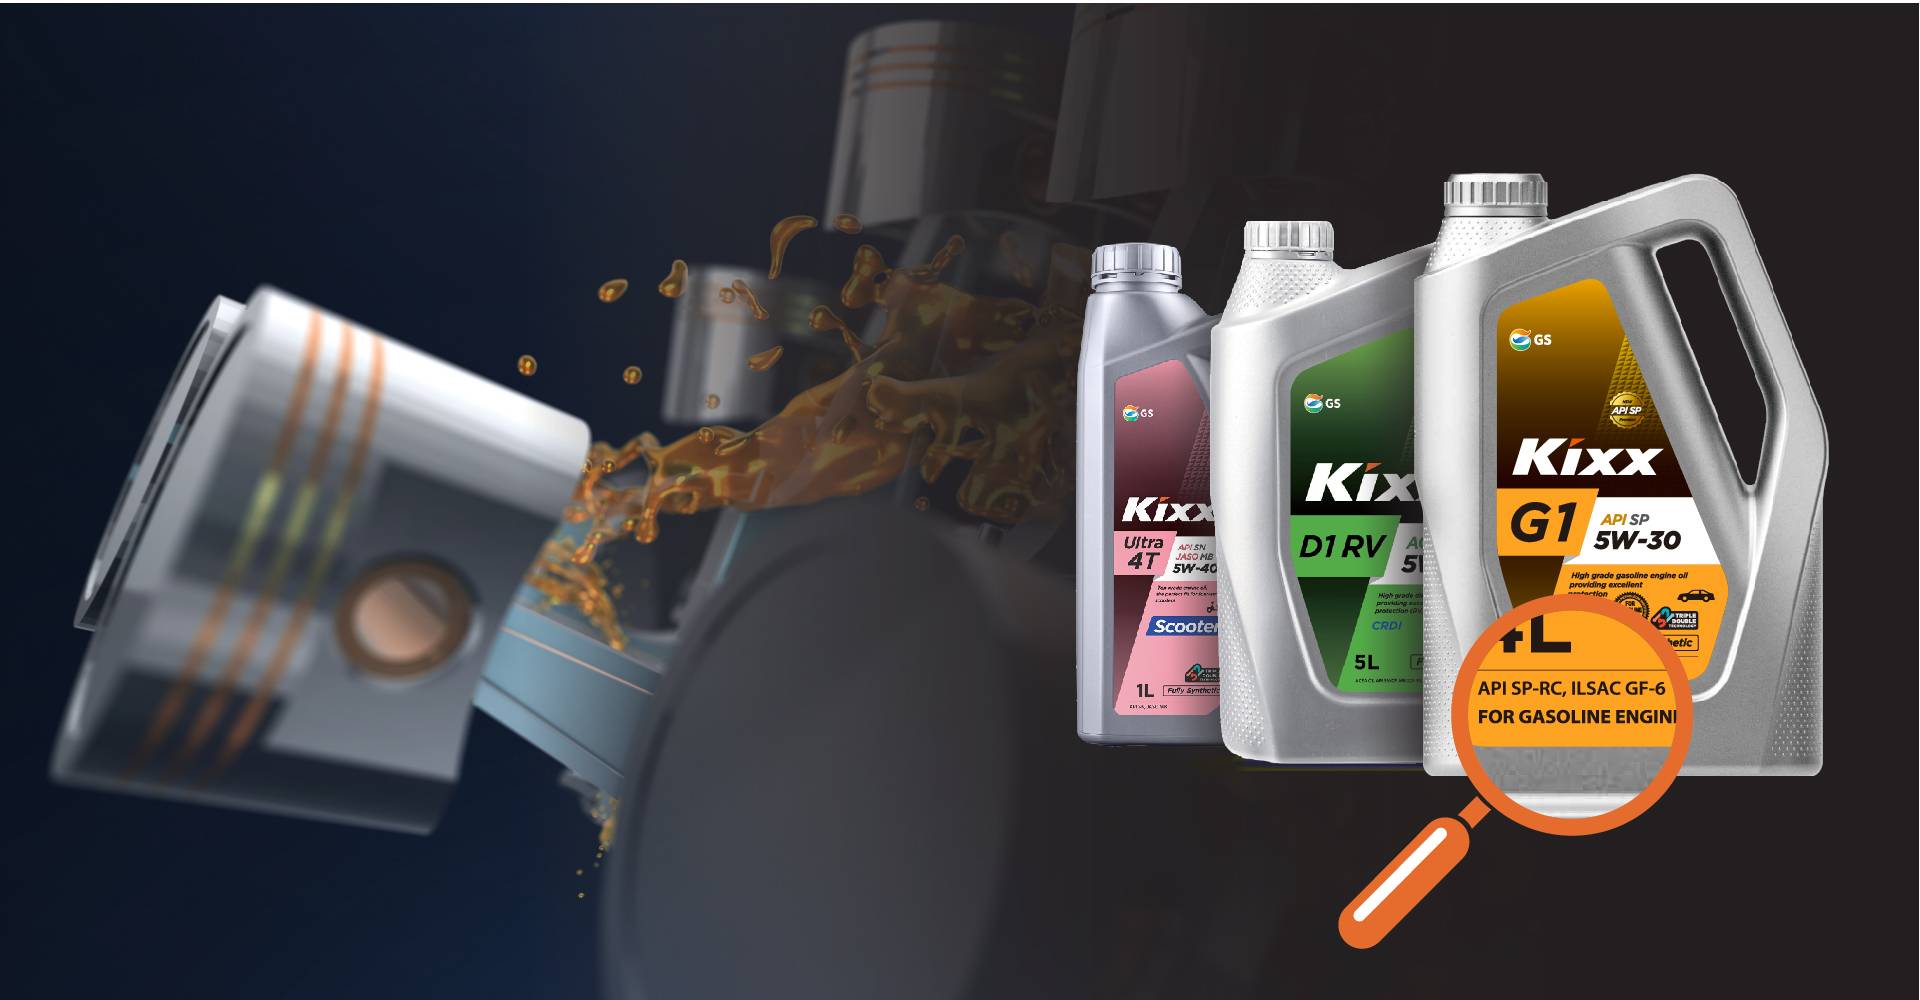  Kixx Oil | Your Guide to Understanding Engine Oil Specs